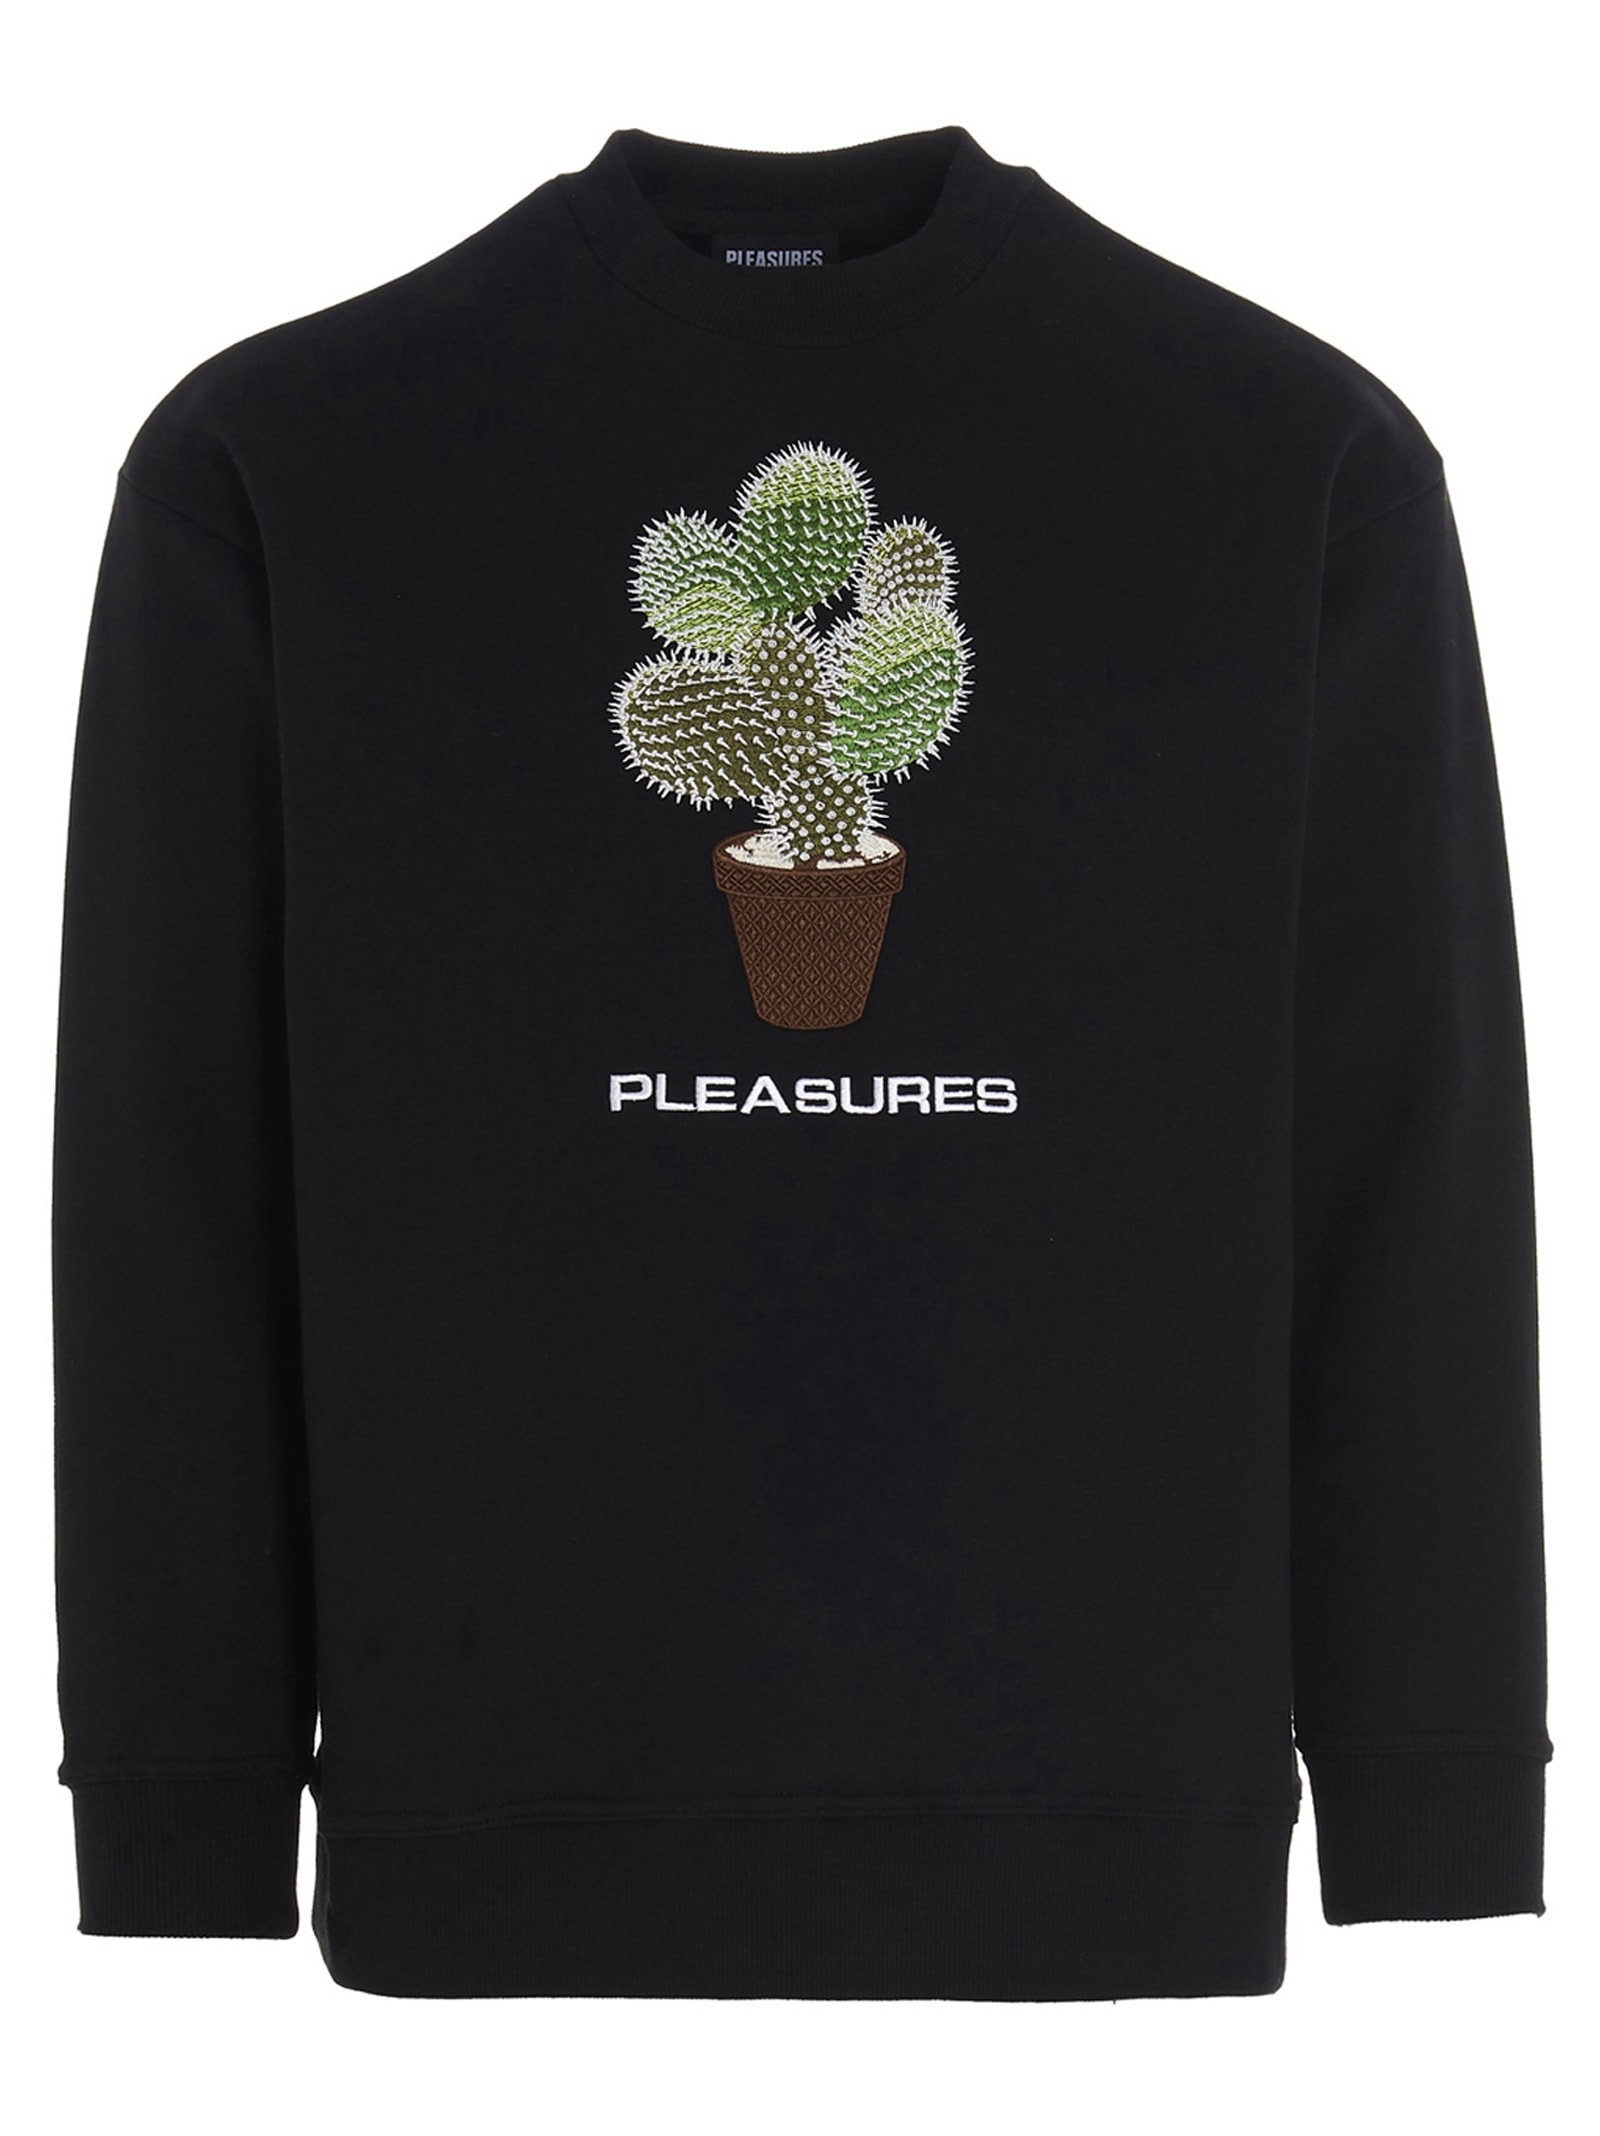 Pleasures spike Embroidered Sweatshirt